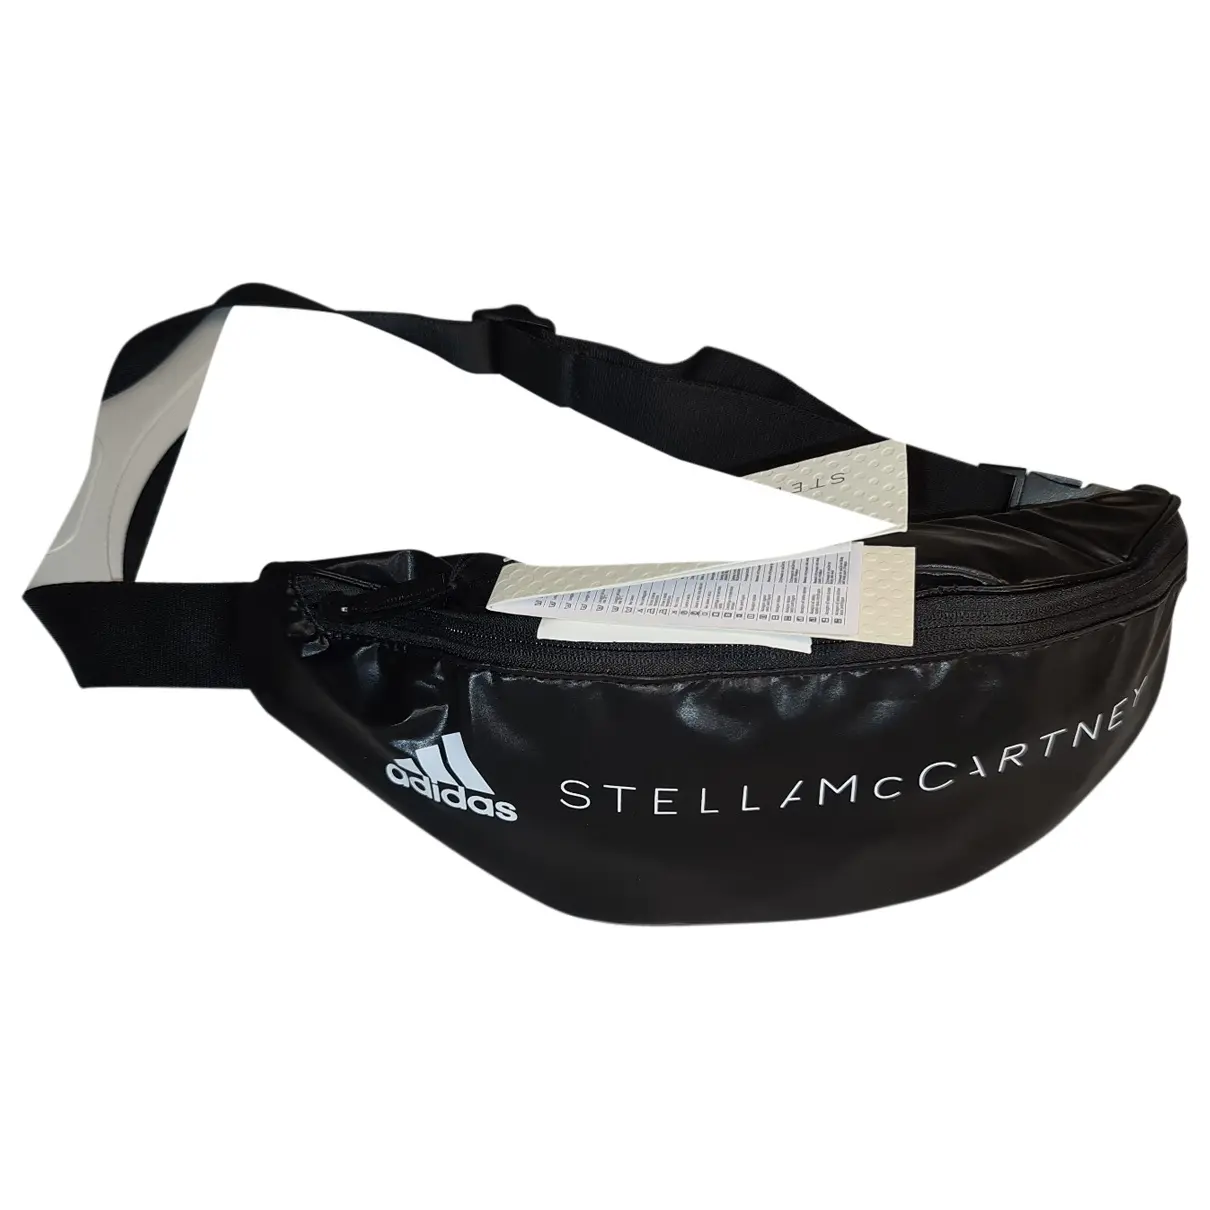 Buy Stella McCartney Pour Adidas Handbag online